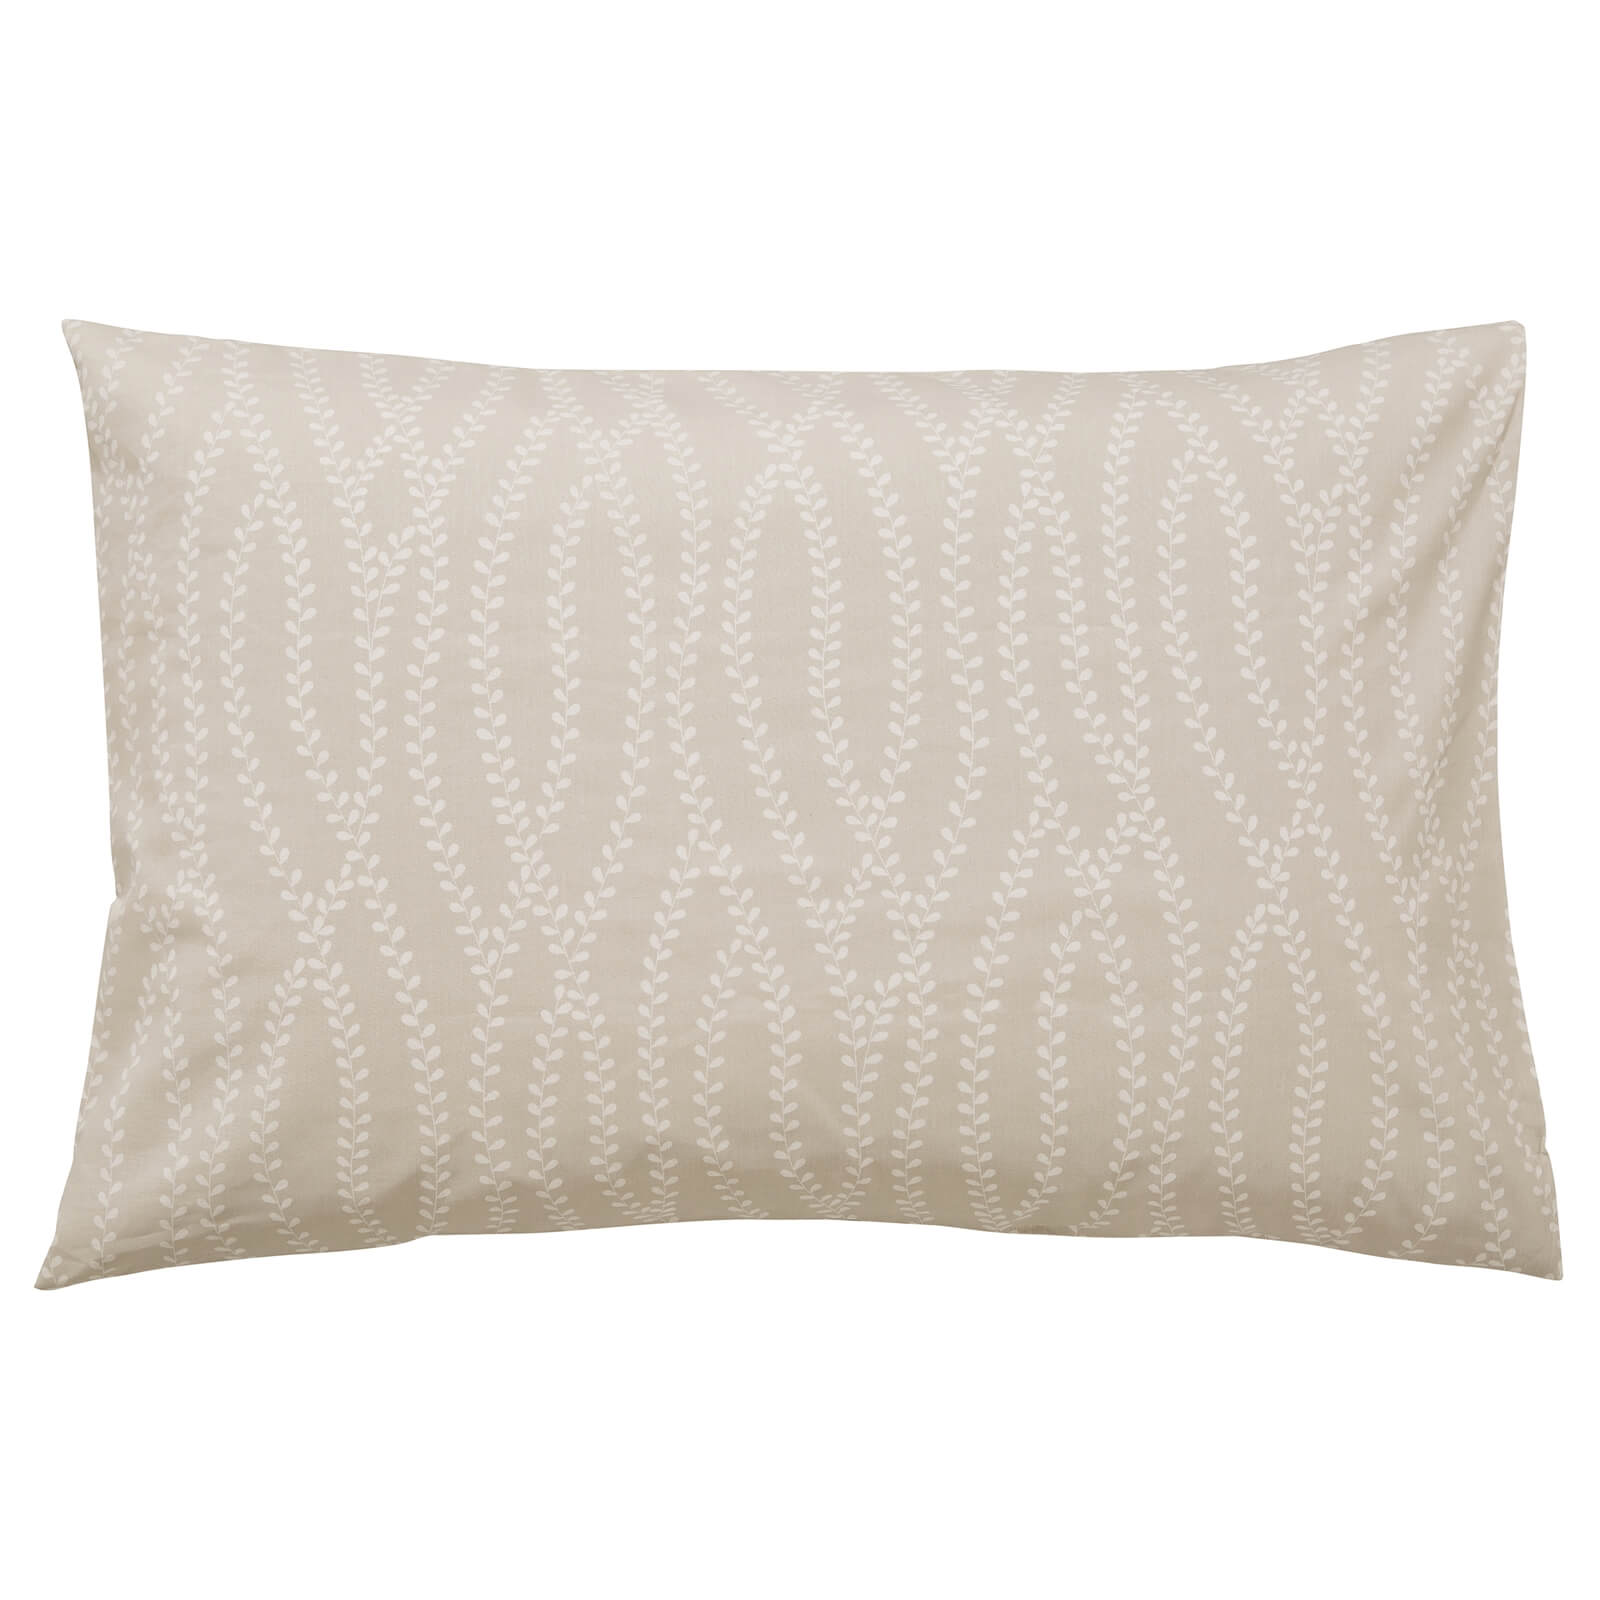 Sanderson Home Sundial Standard Pillowcase Pair - Linen